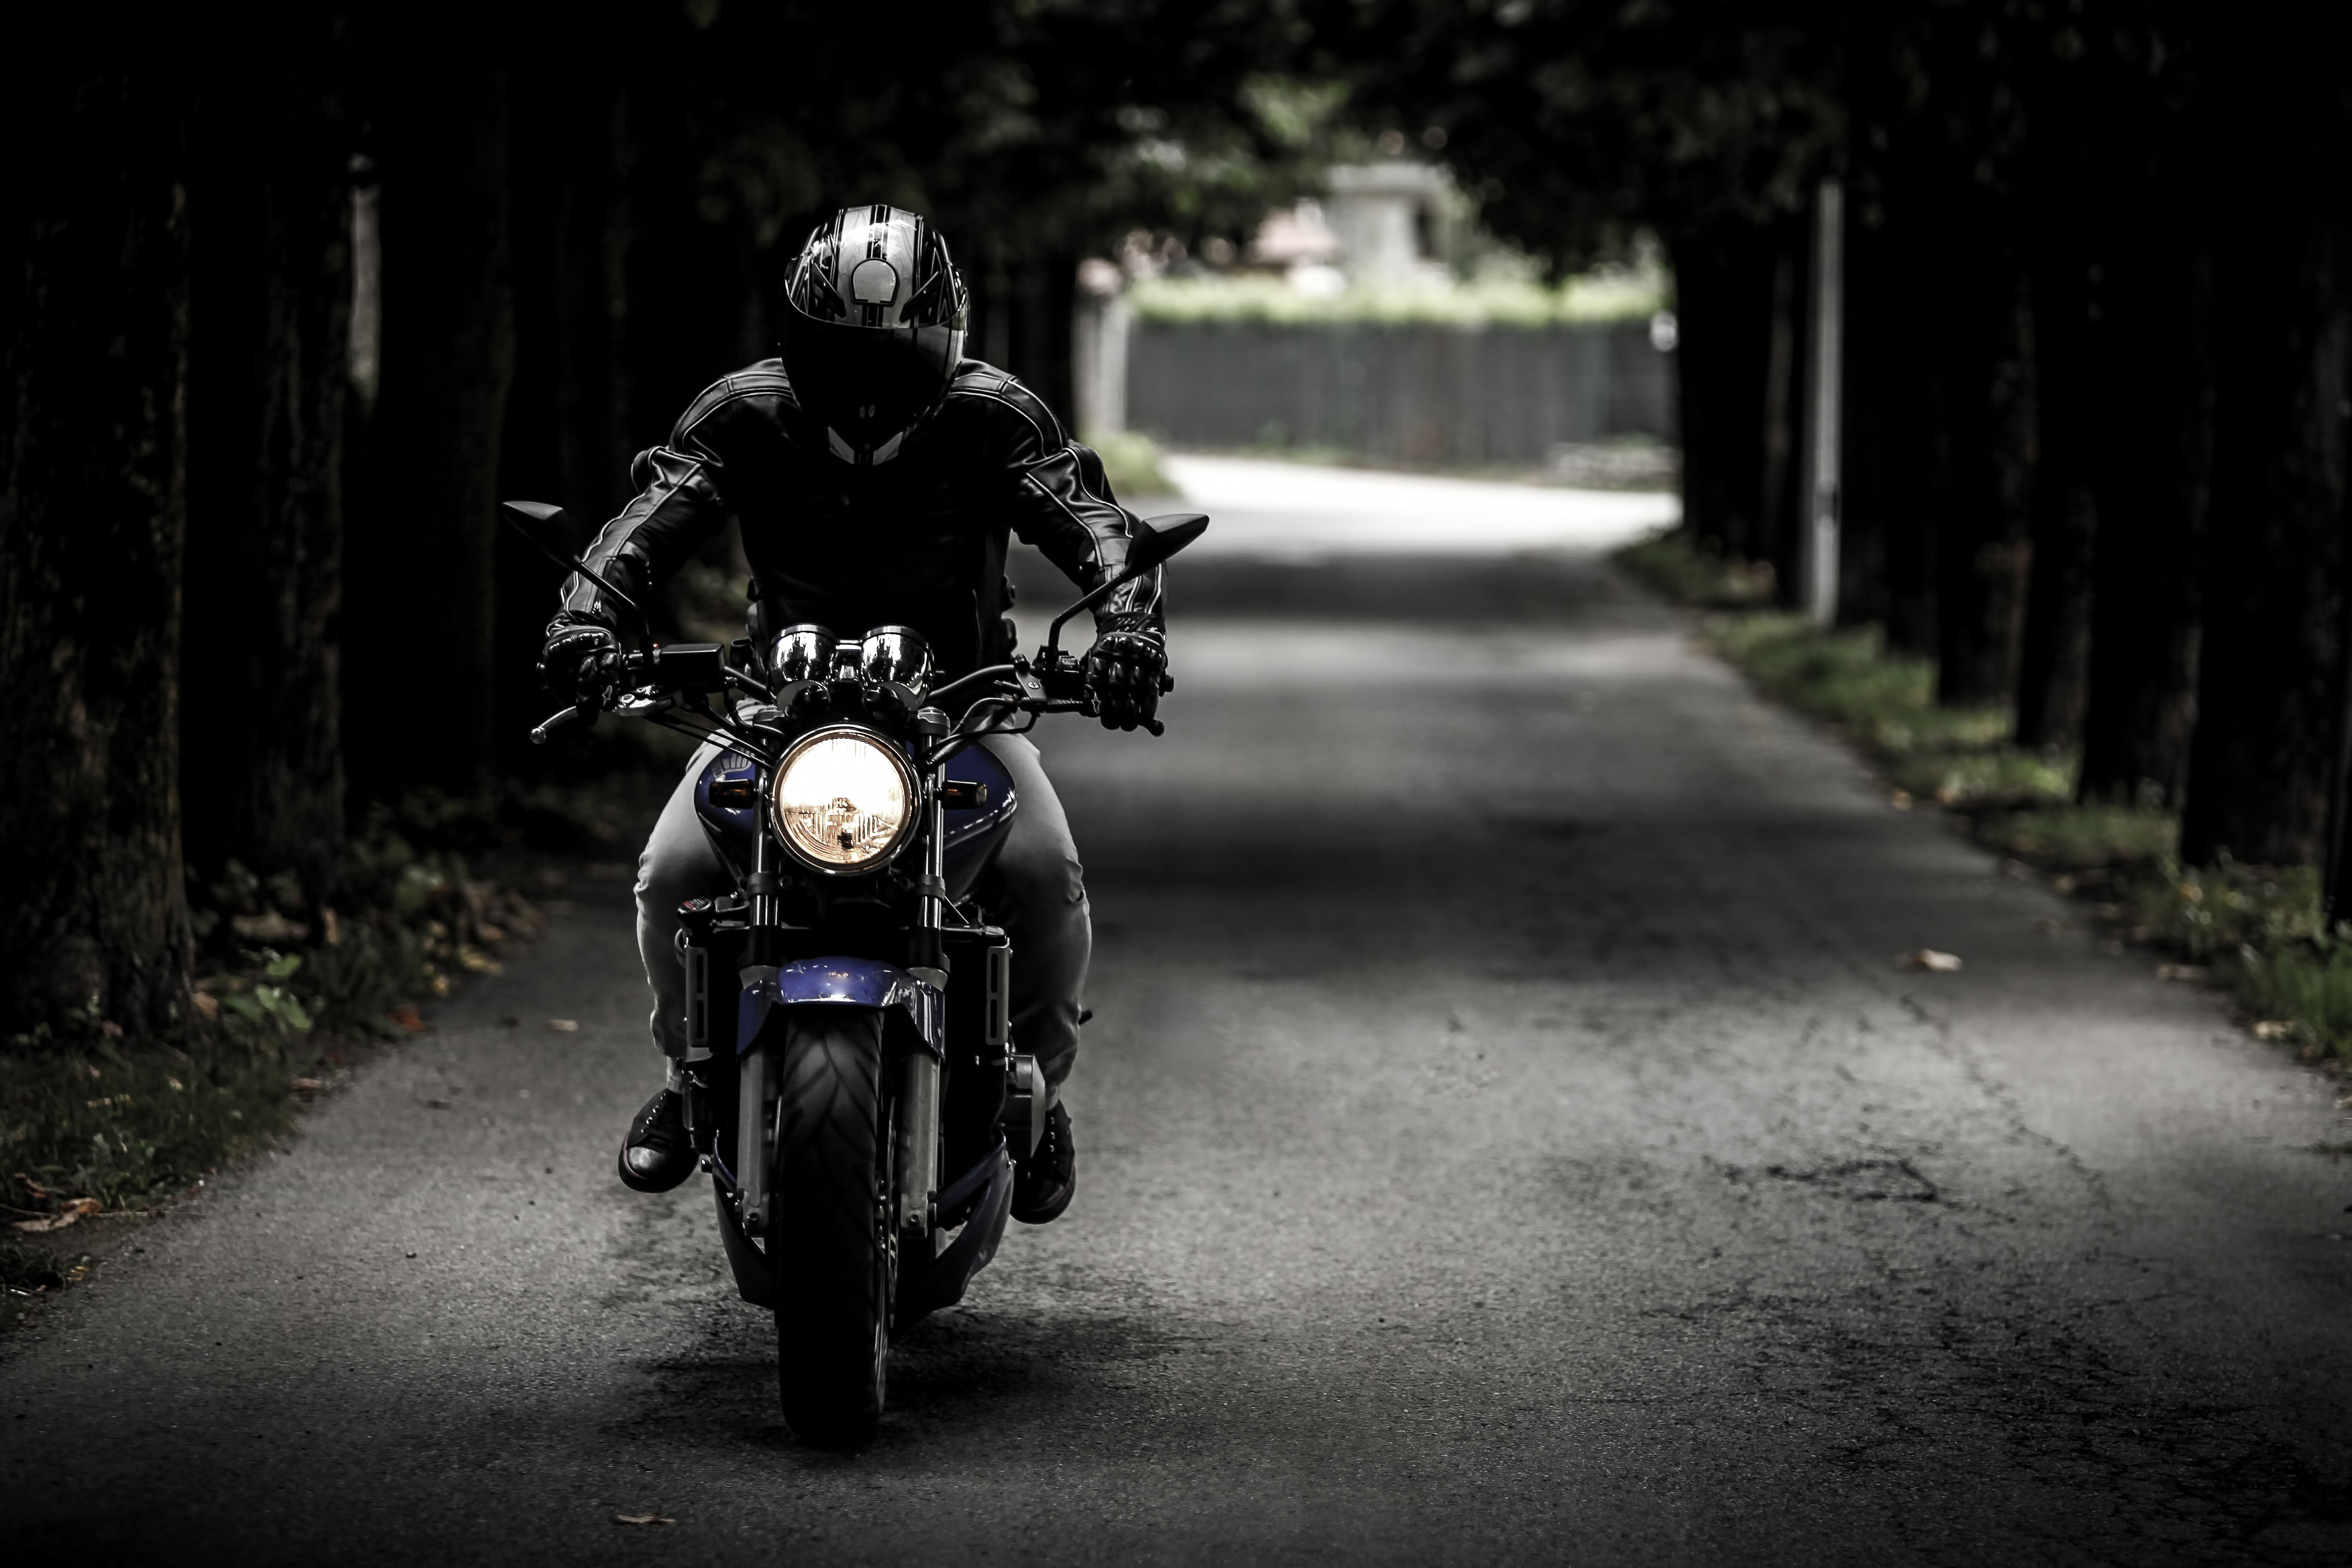 motorcycle wallpaper,motorcycle,black,vehicle,motorcycling,mode of transport